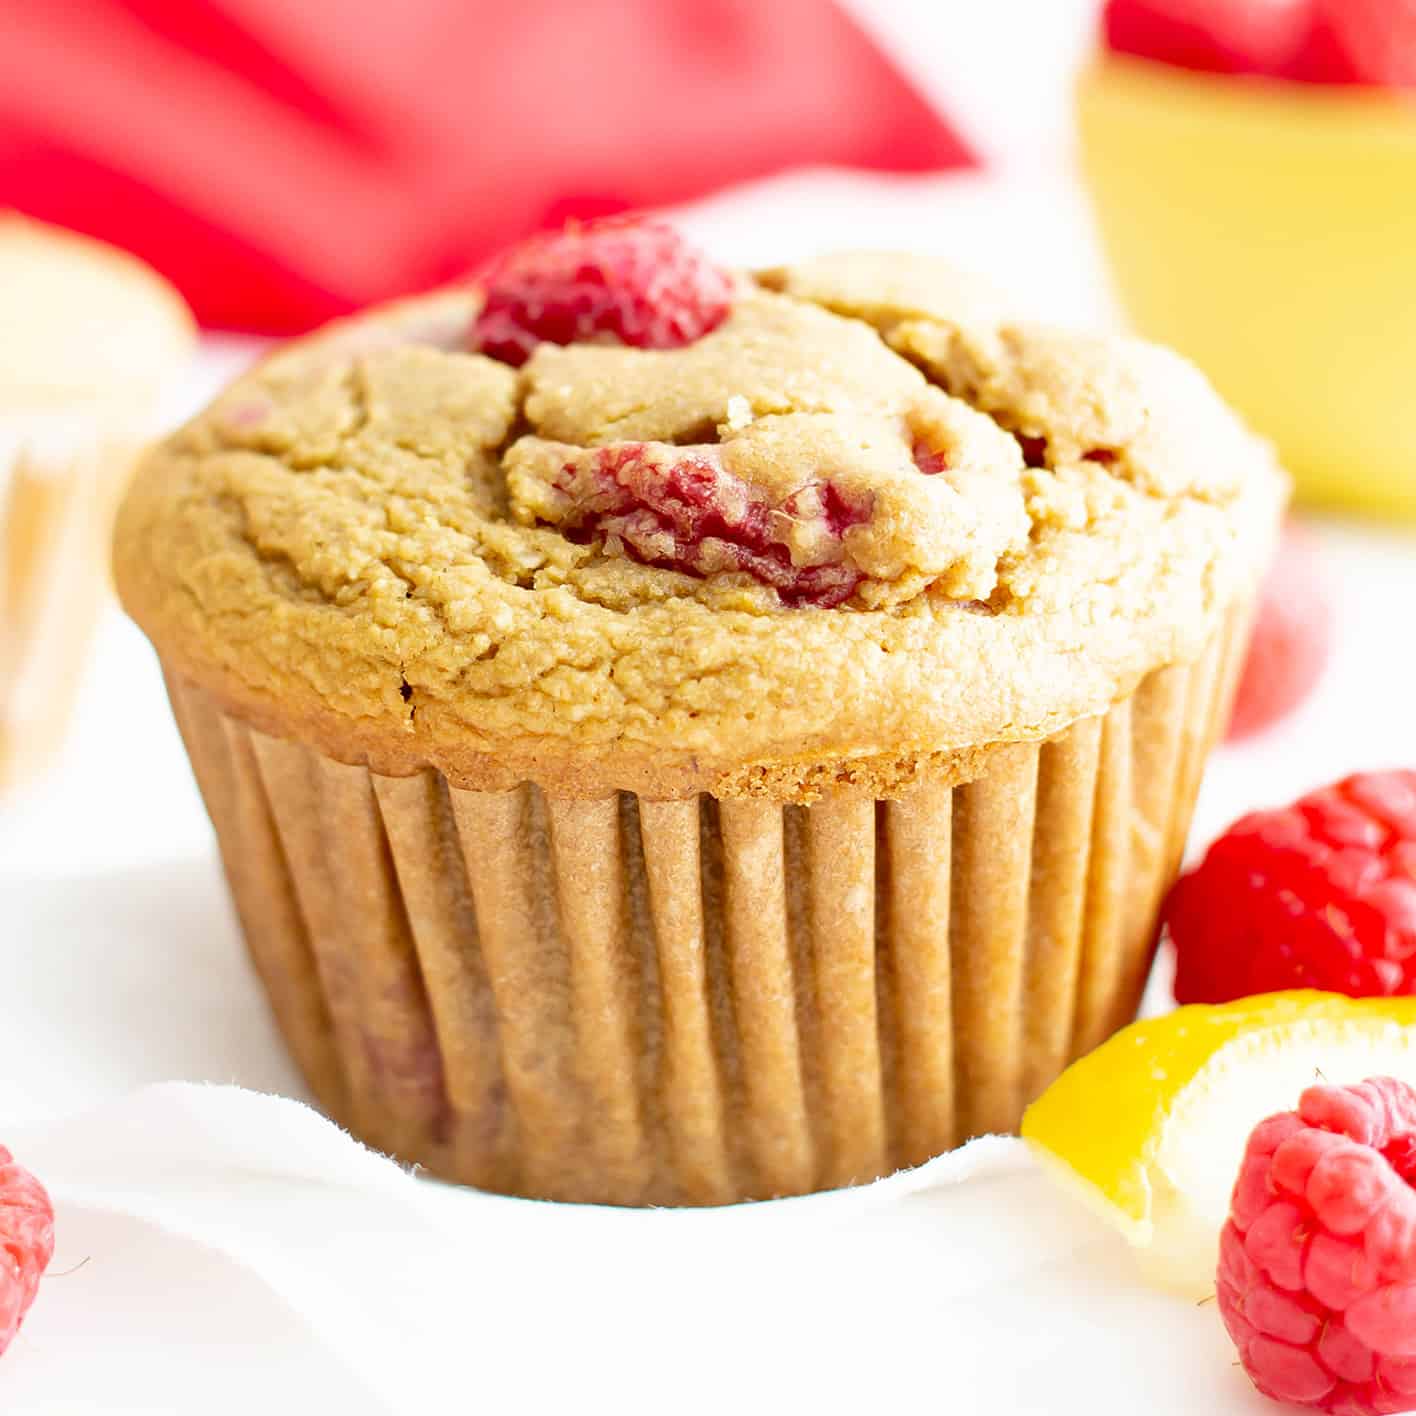 Healthy Lemon Raspberry Muffins Recipe – Easy Gluten Free Vegan Muffins!